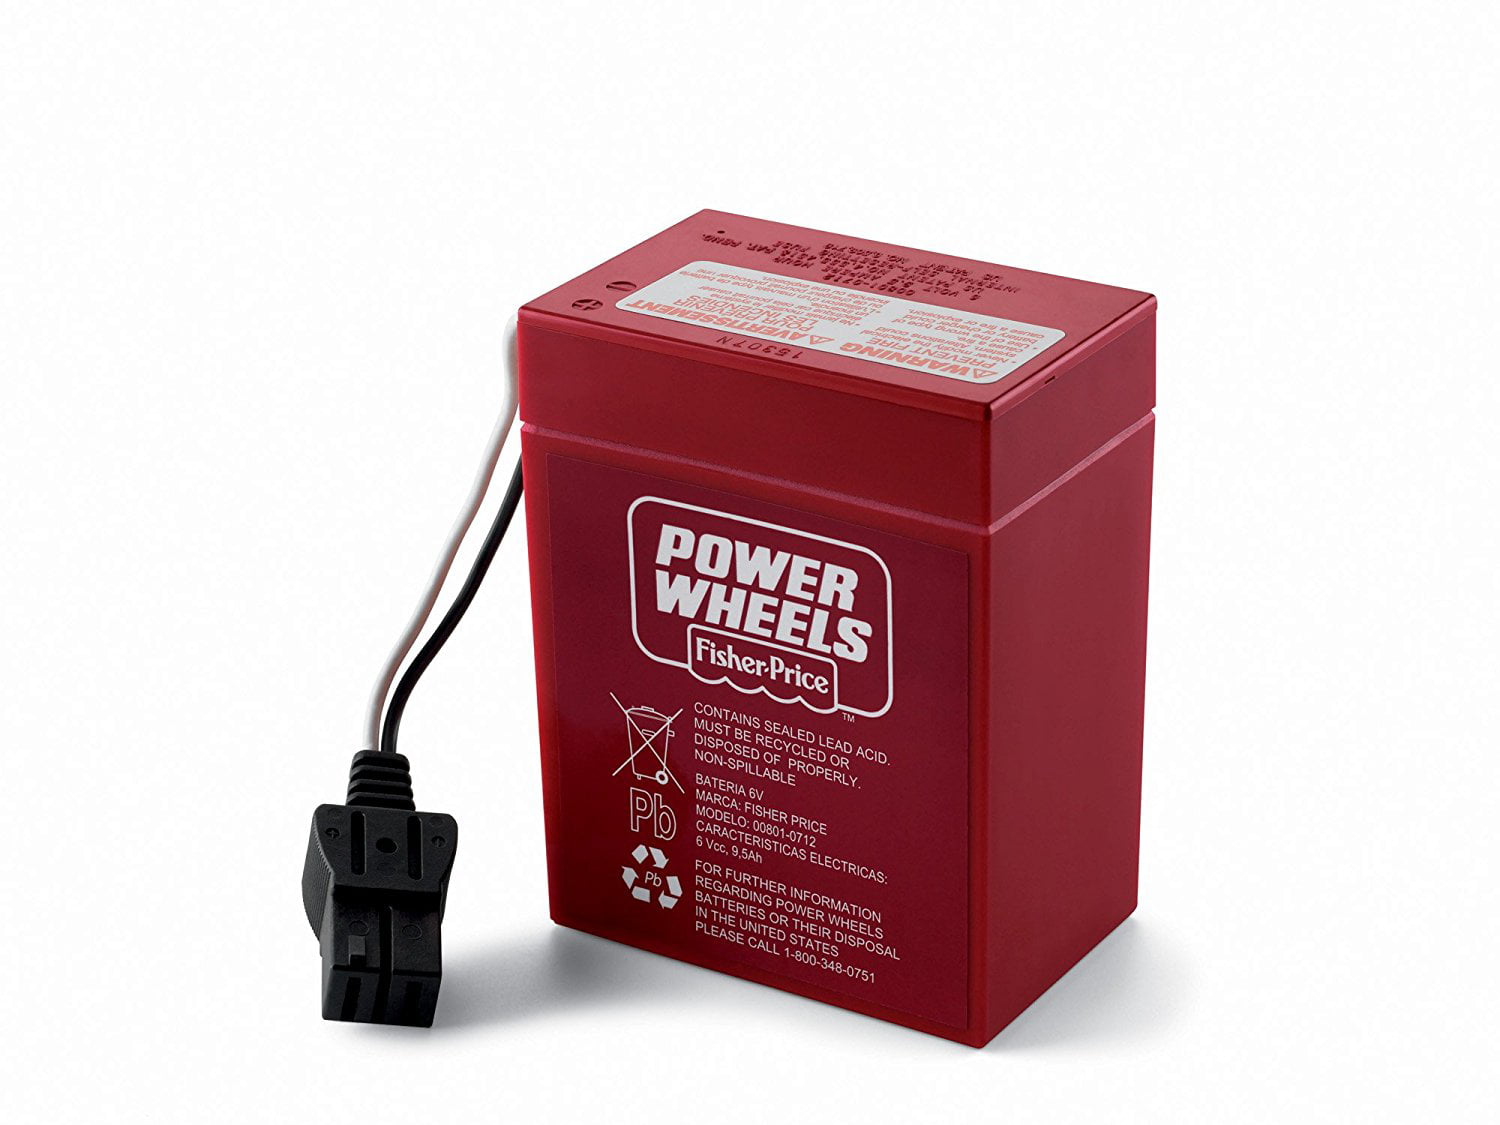 Power Wheels 12 V Battery for Ride On Toys for sale online Grey/Orange 00801-1661 